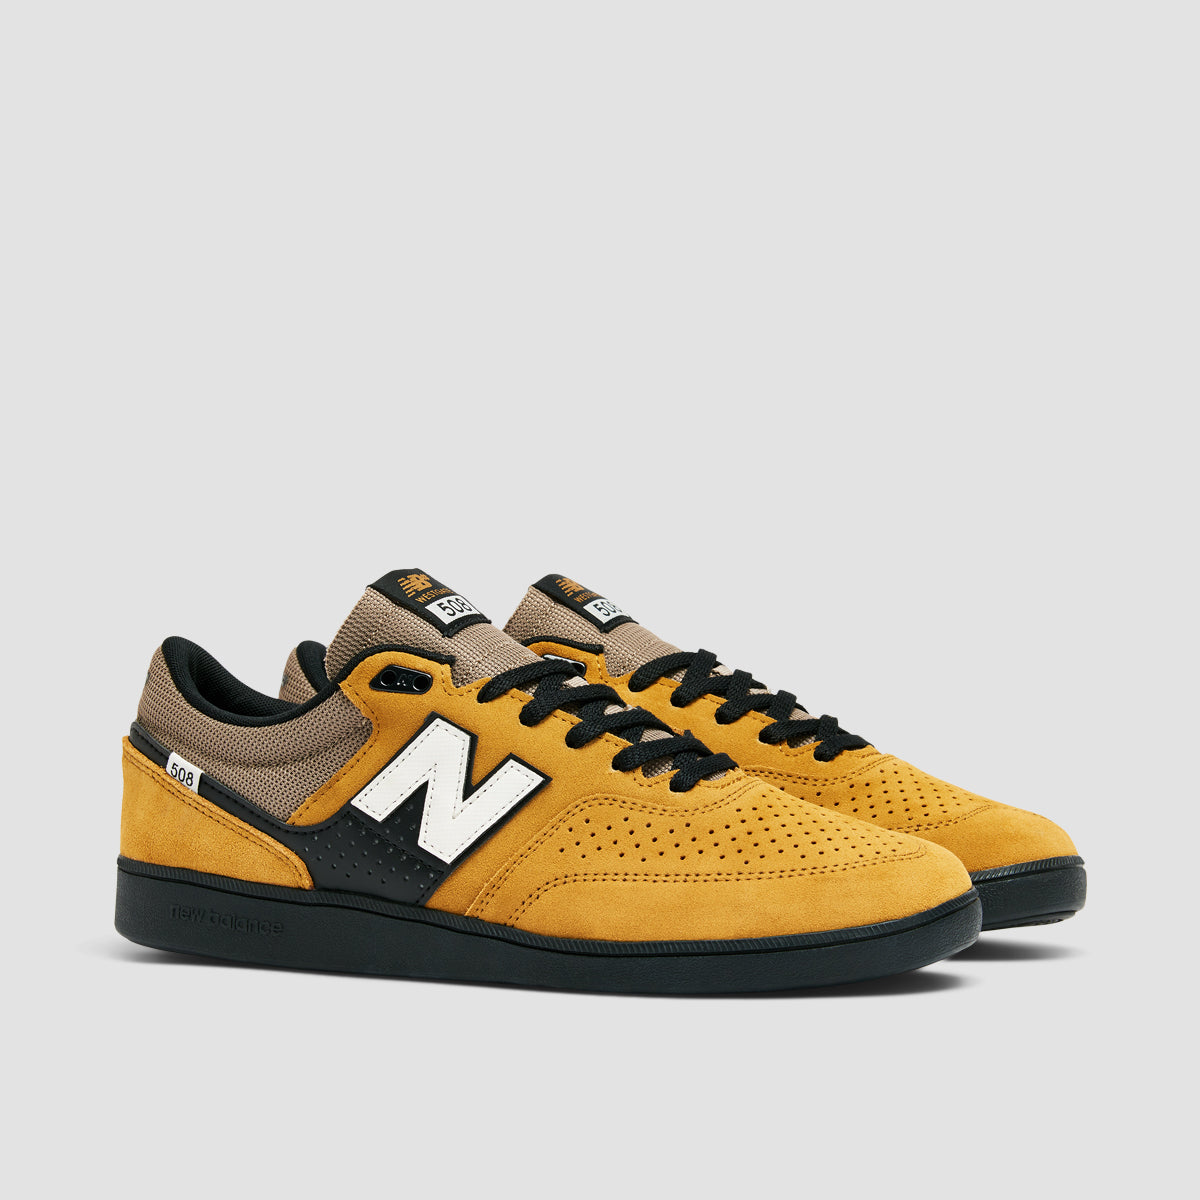 New Balance Numeric 508 Brandon Westgate Shoes - Dolce/Black